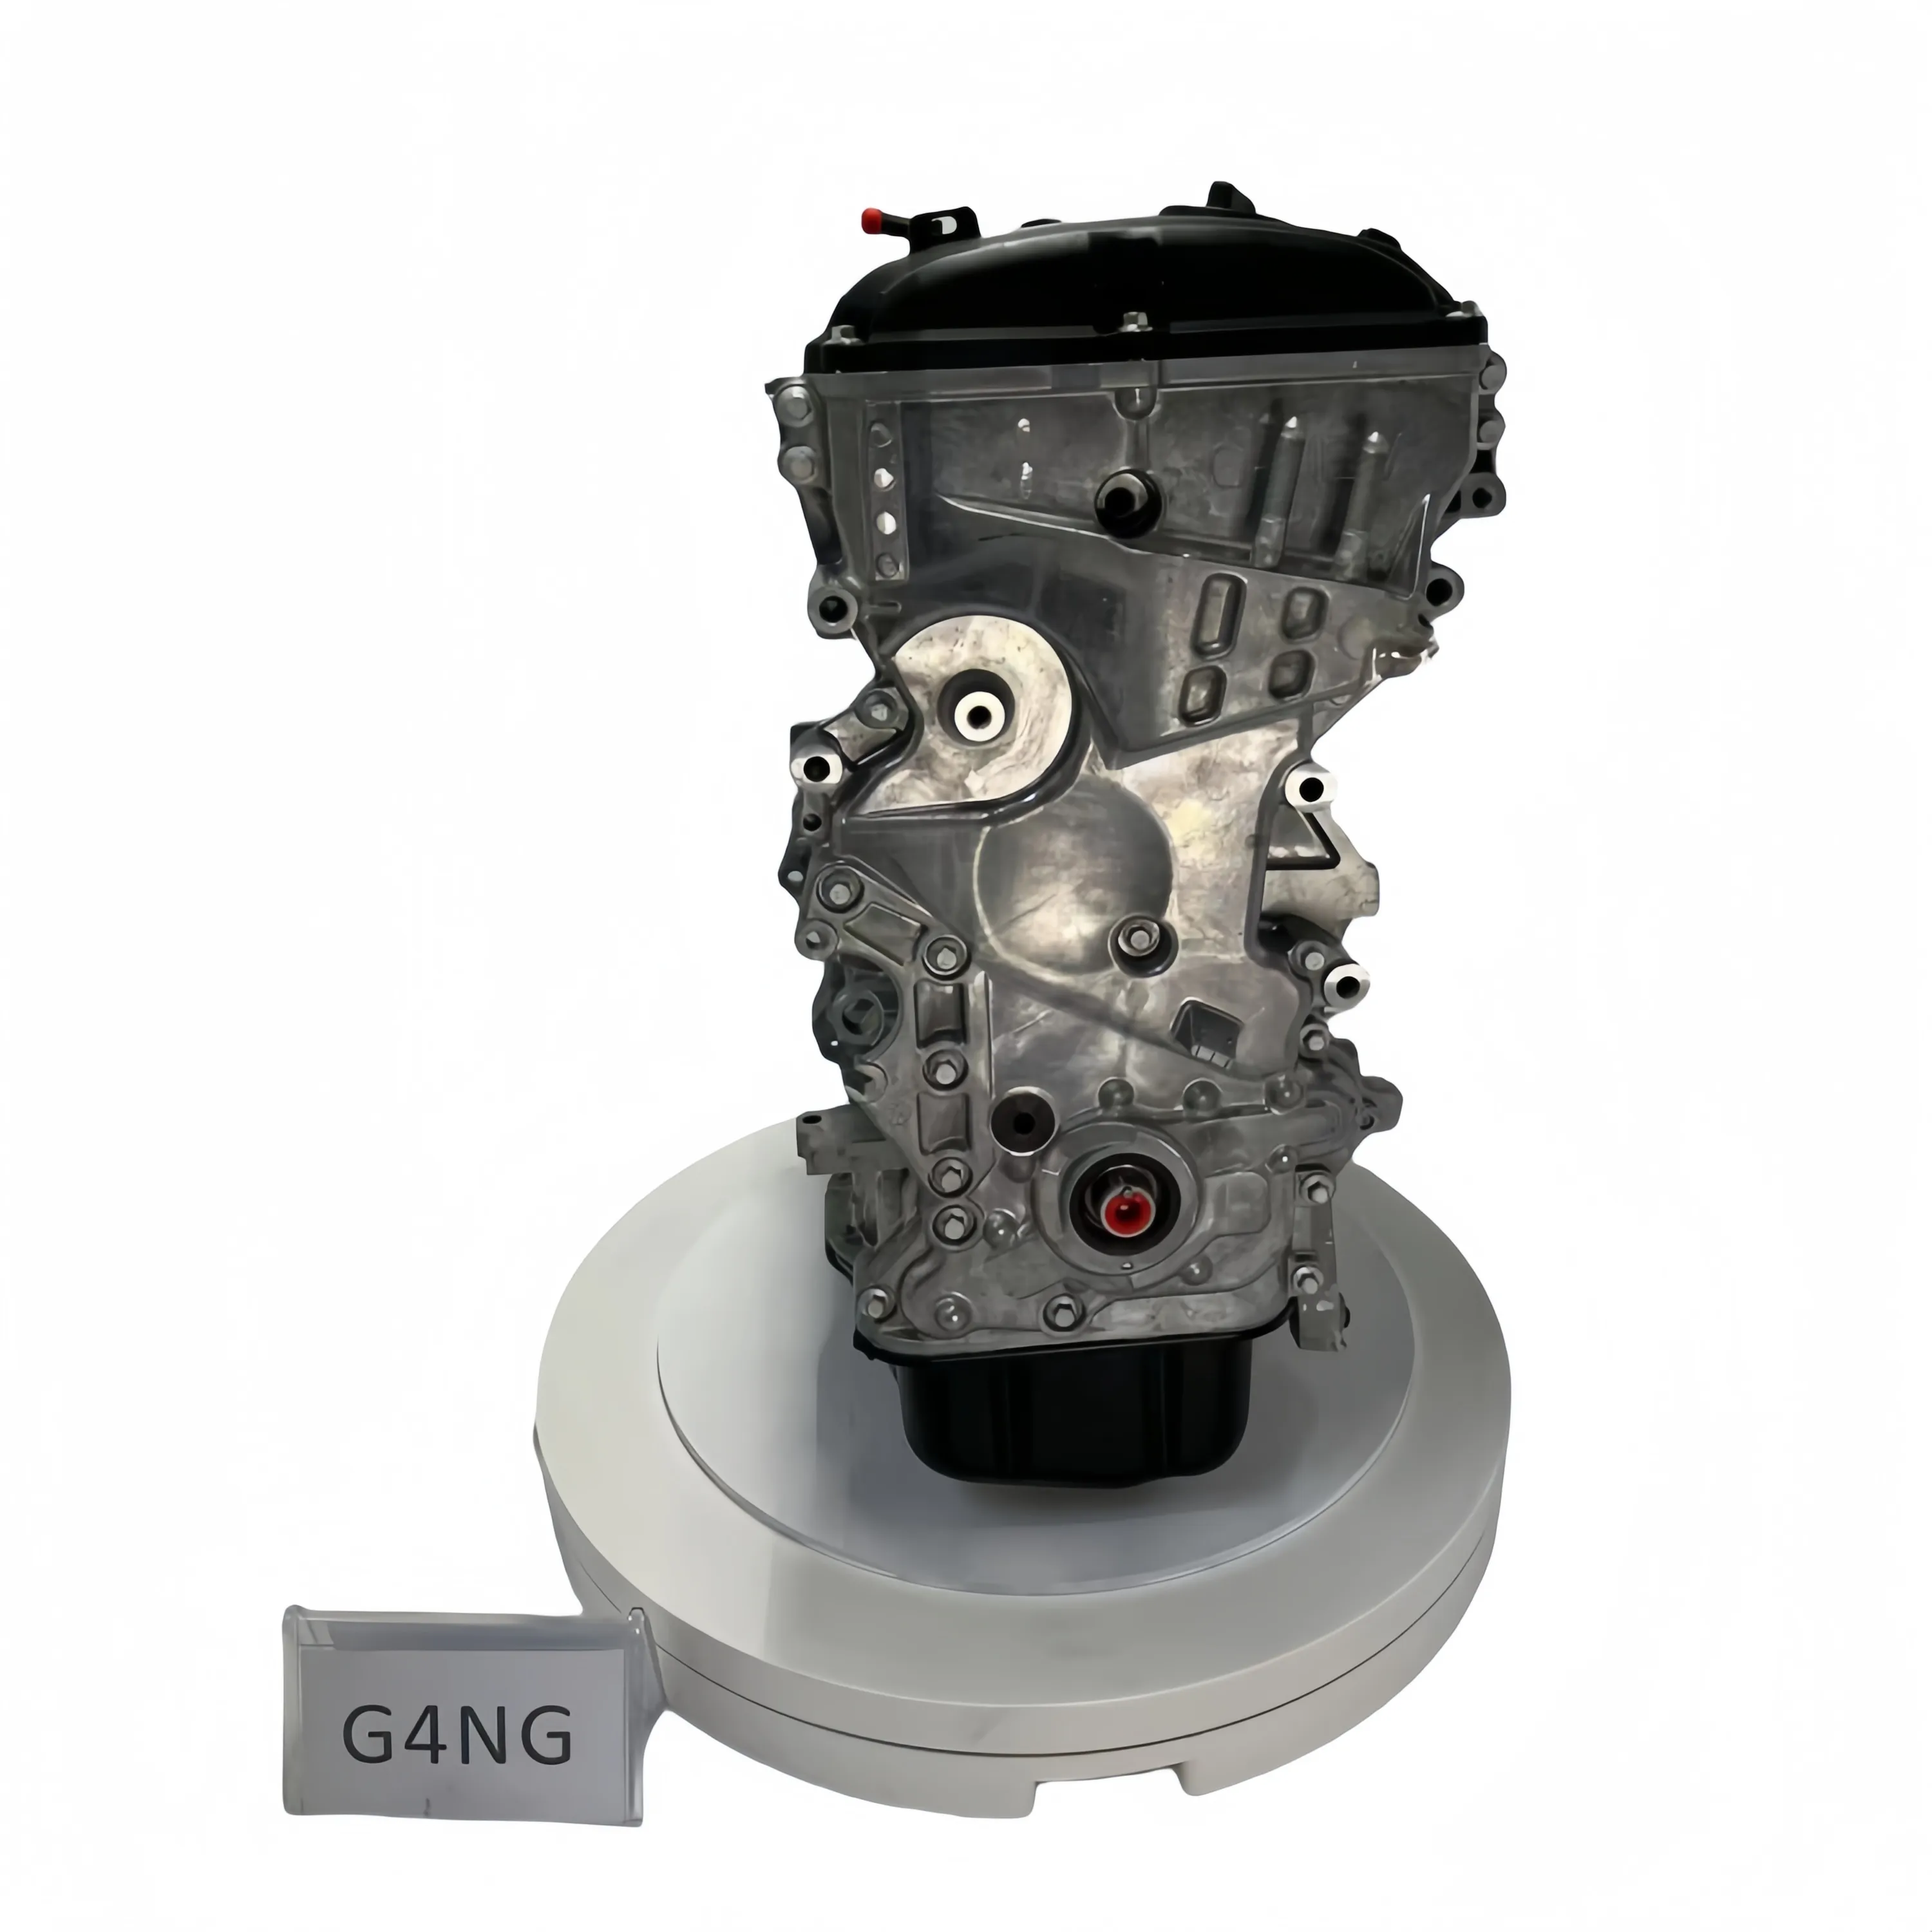 Conjunto de motor G4NG de corpo nu de alta qualidade, adequado para o carro coreano Pals G4NG 2.0L